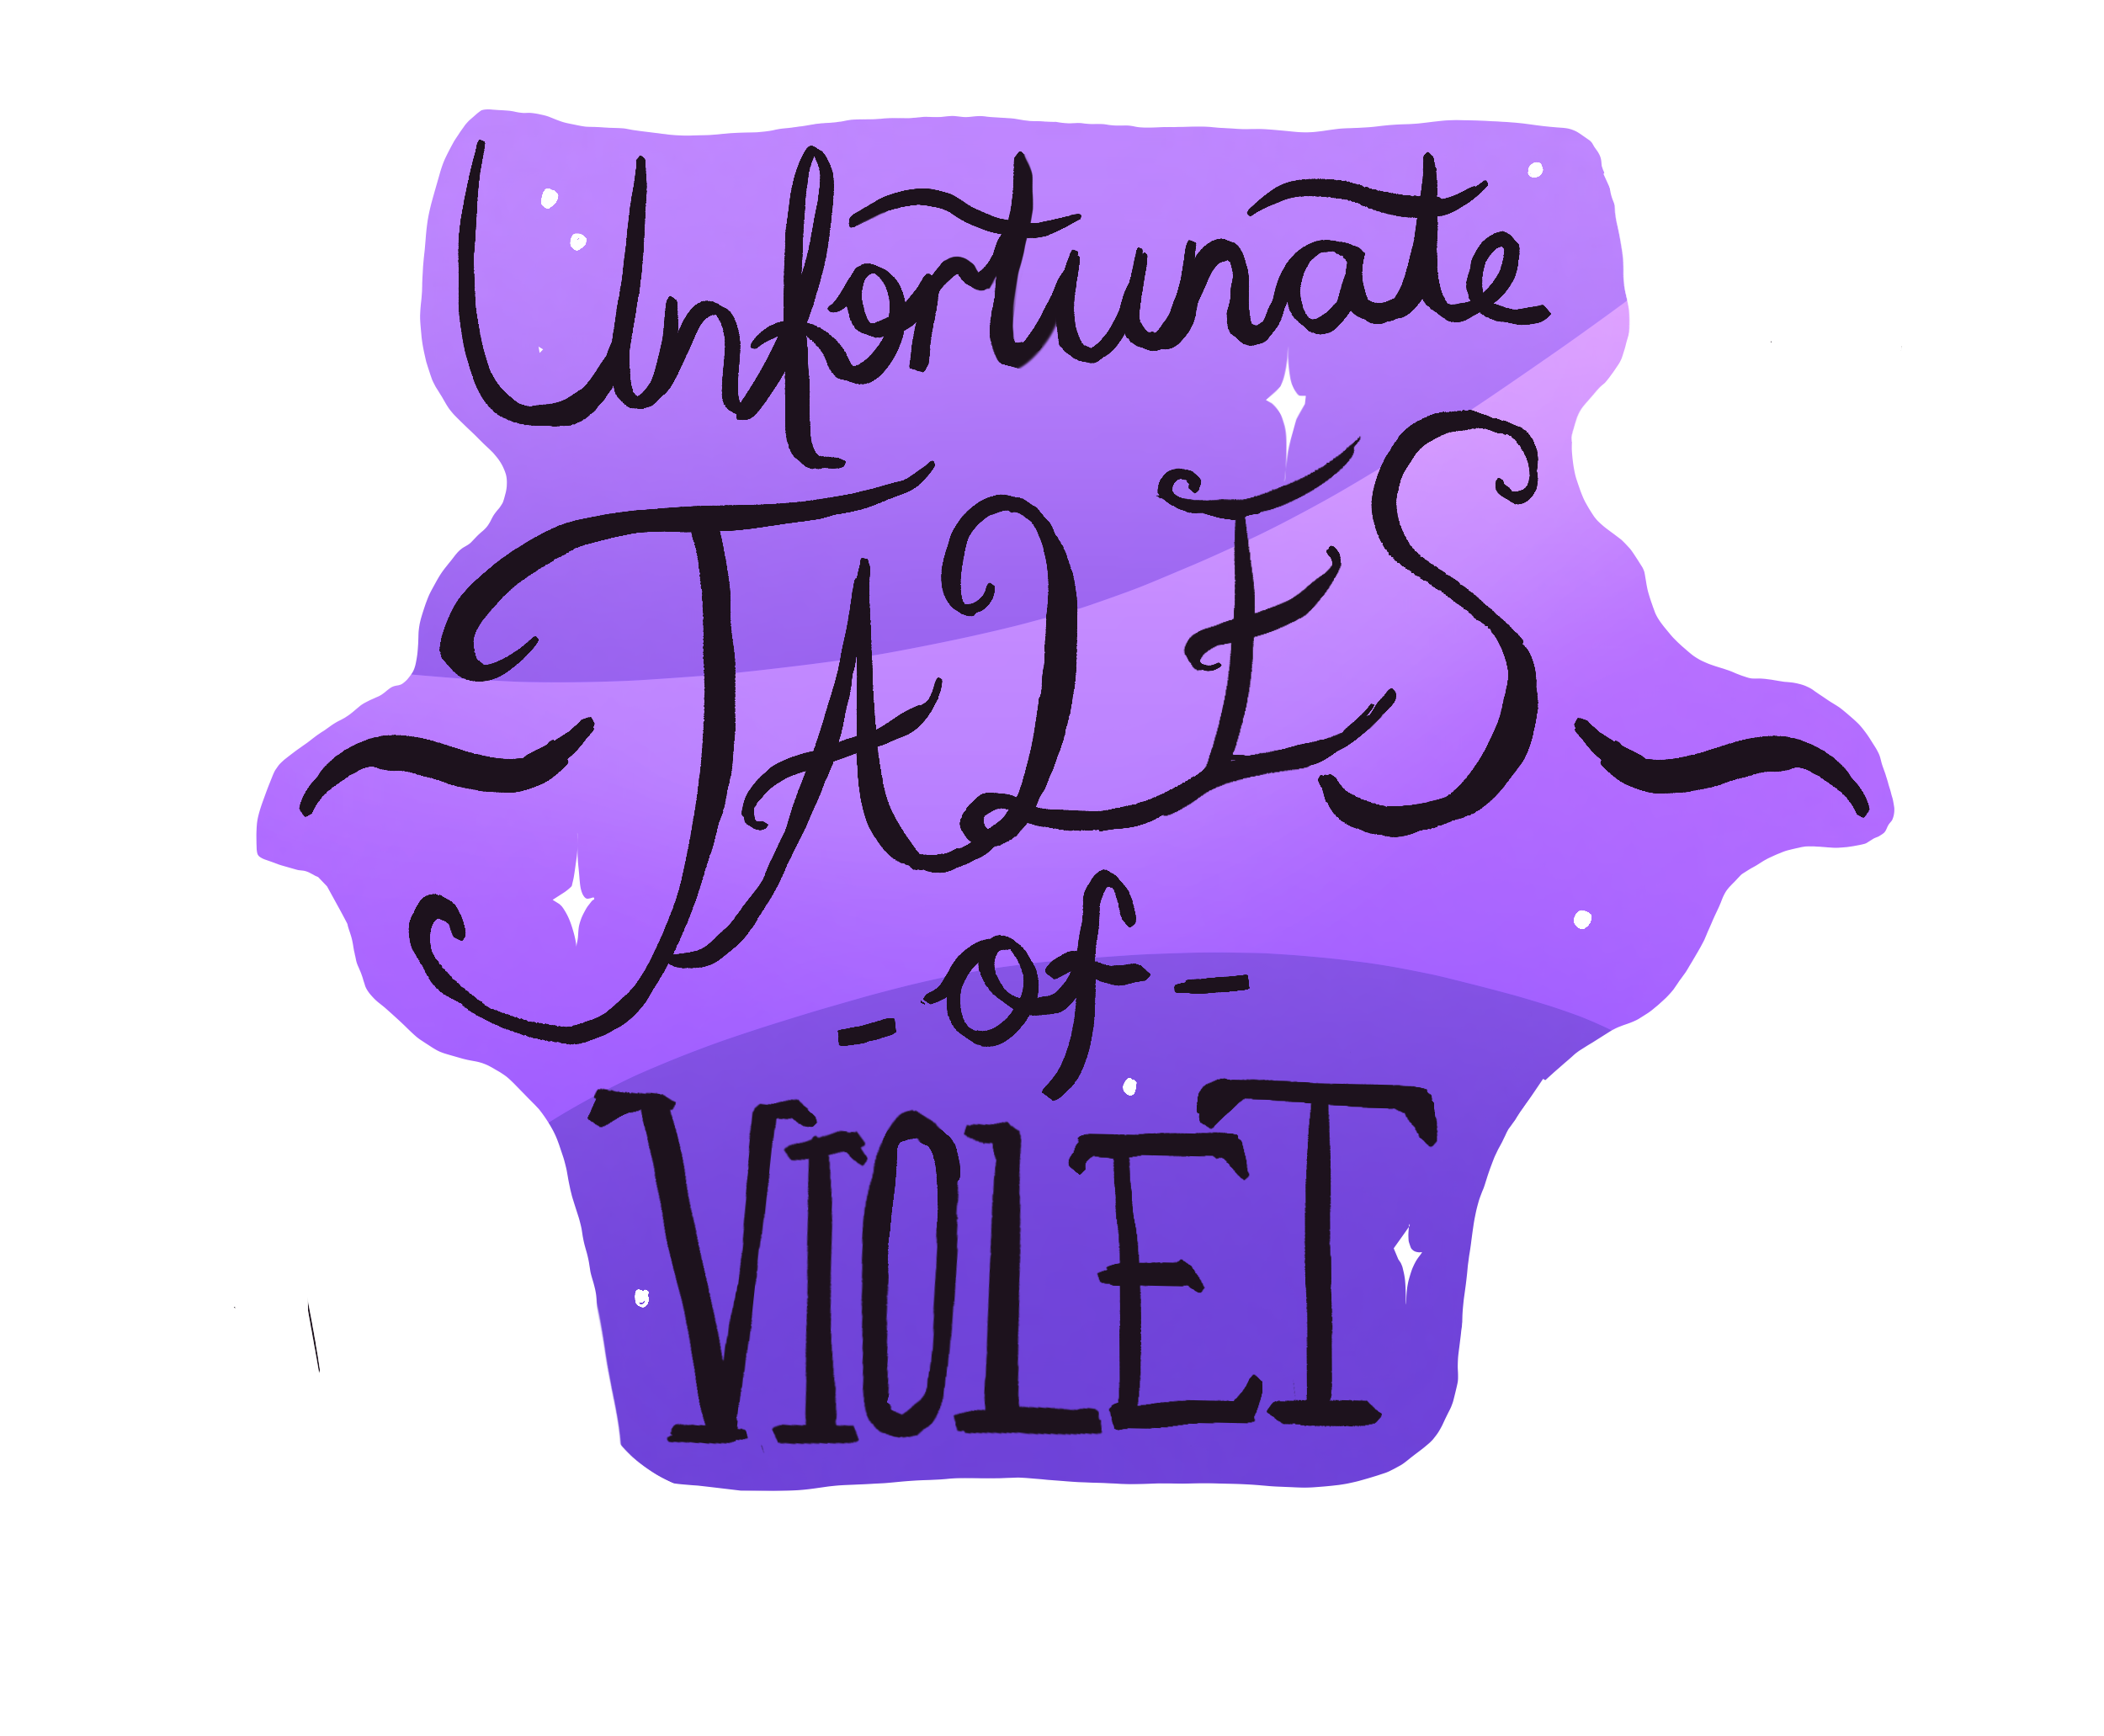 Unfortunate Tales of Violet